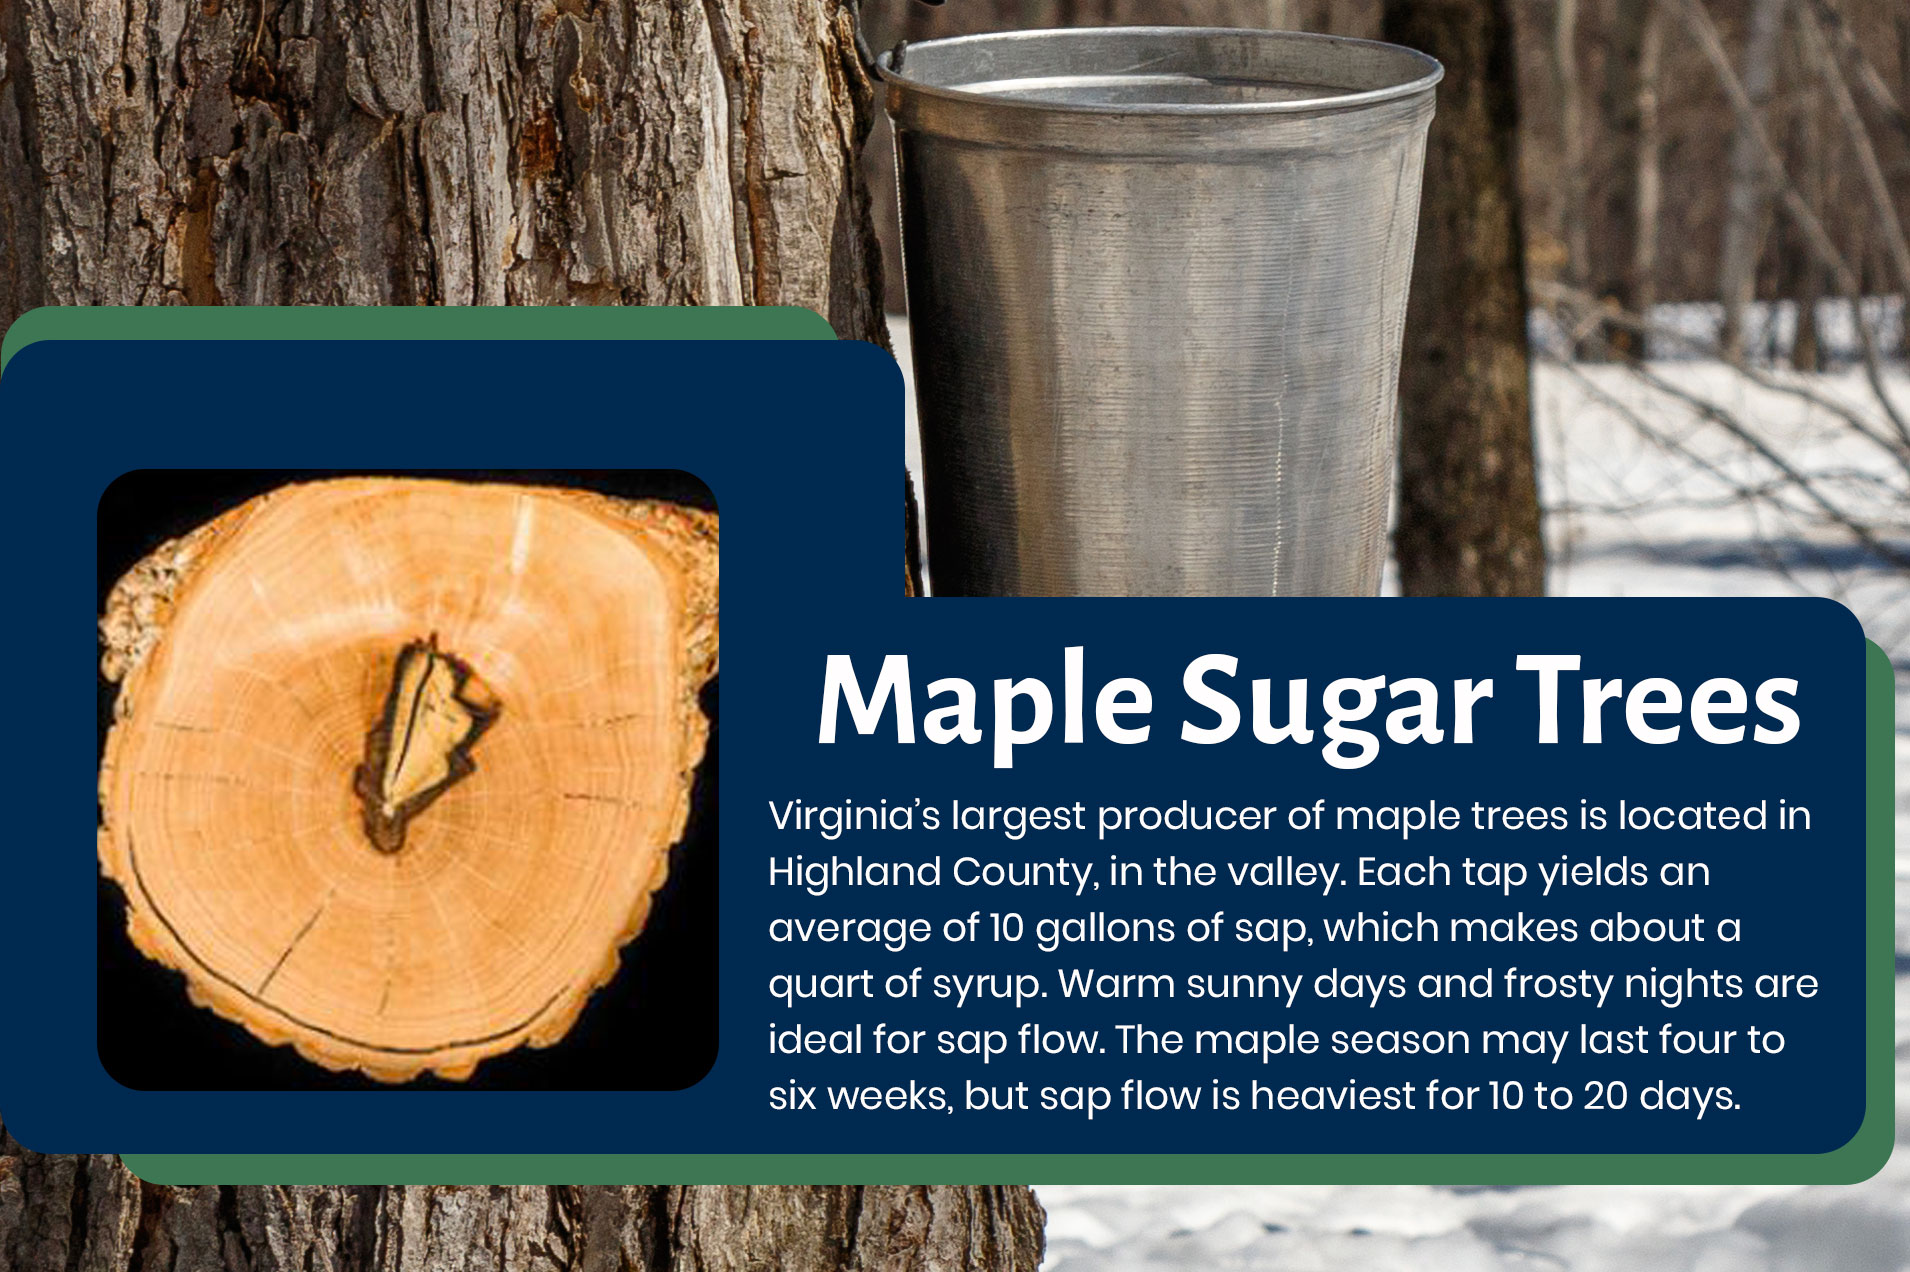 Maple Sugar Trees